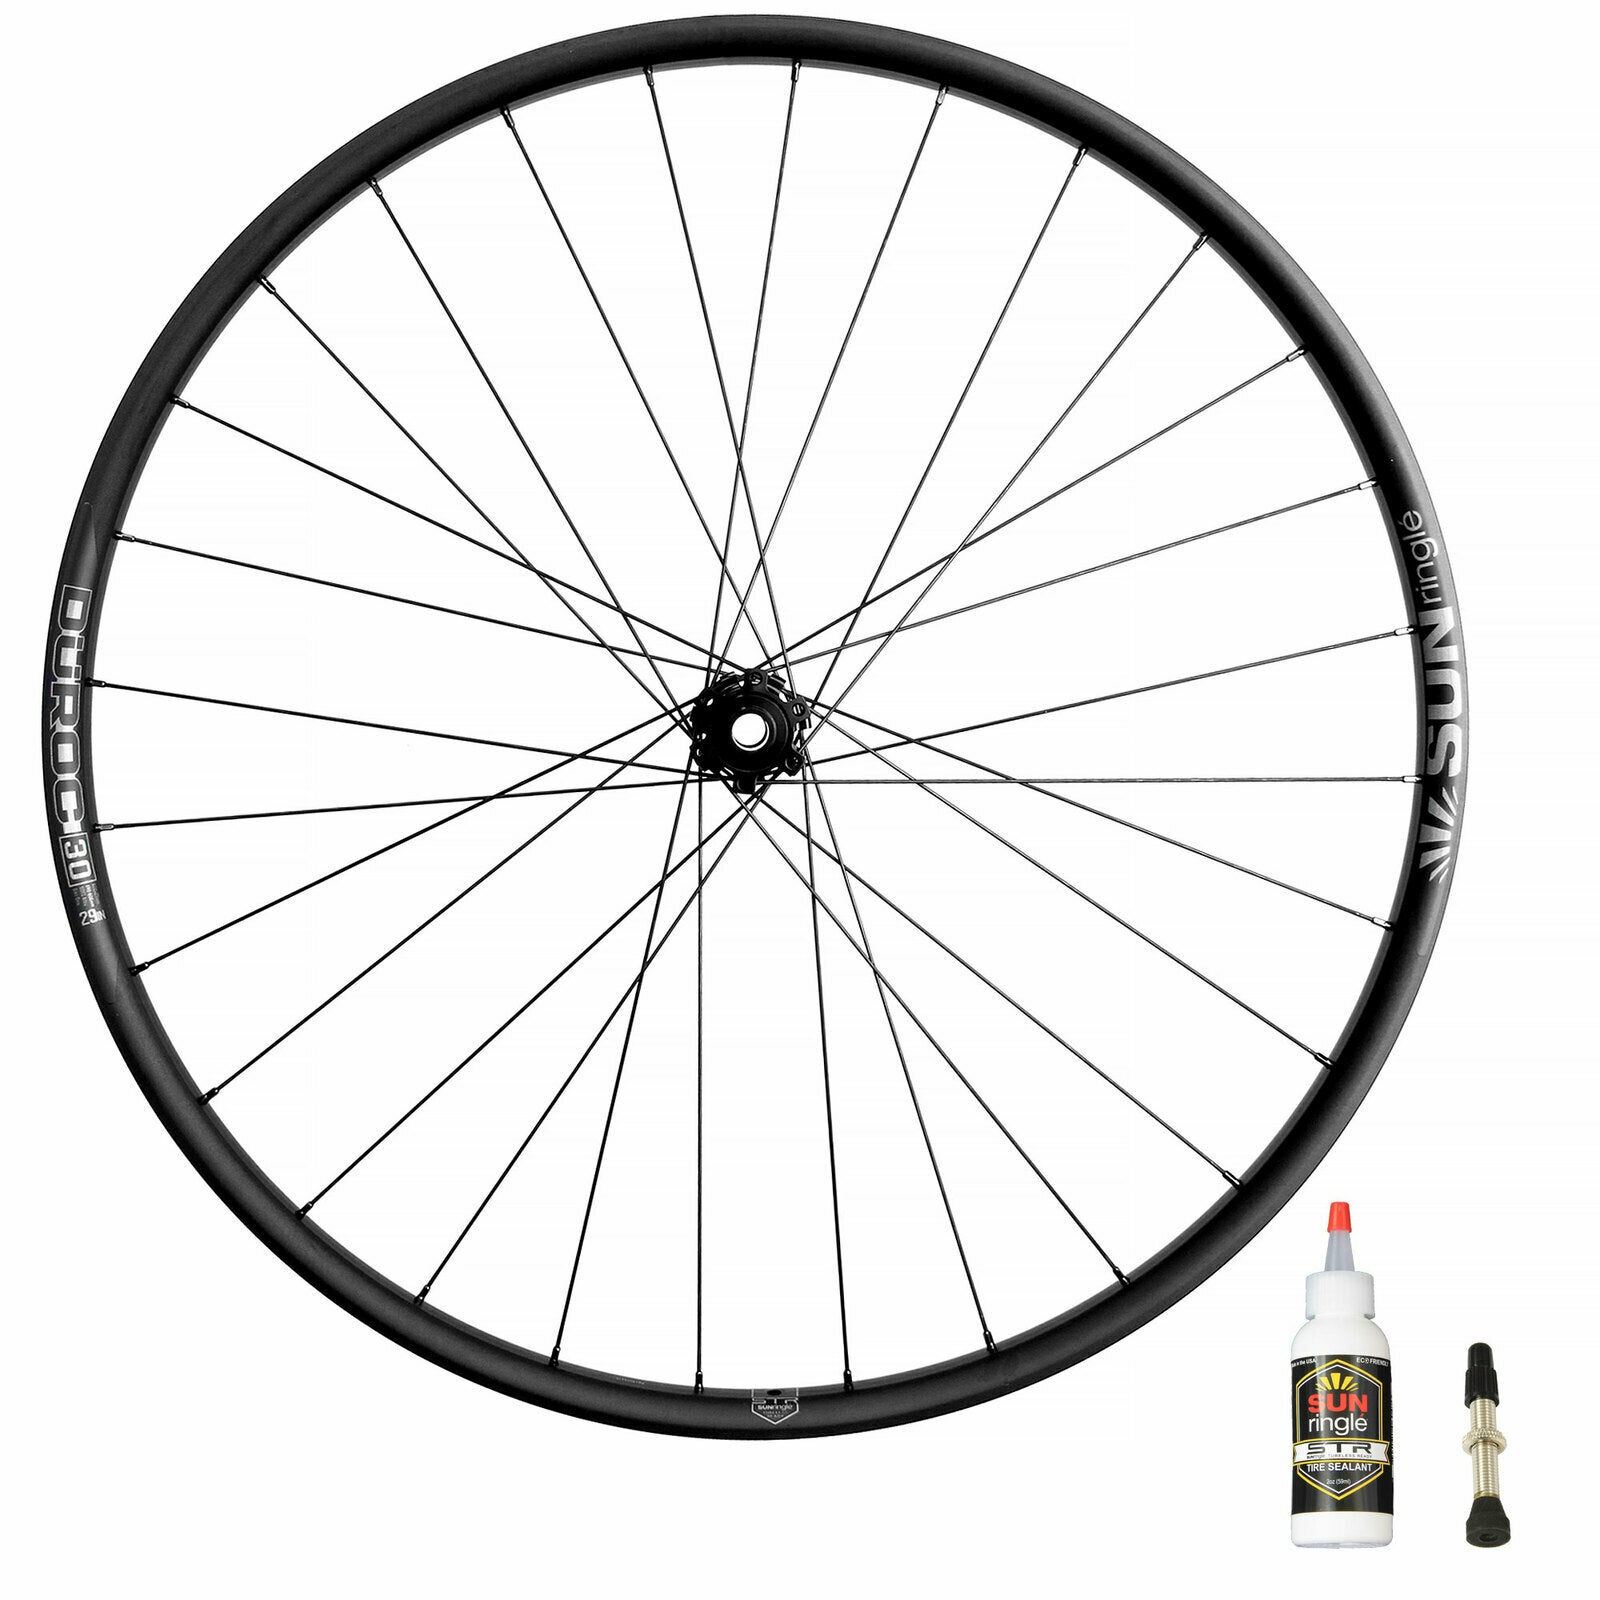 Sun Ringle Duroc 30 Expert Bike Bicycle Tubeless Ready Wheel 29"